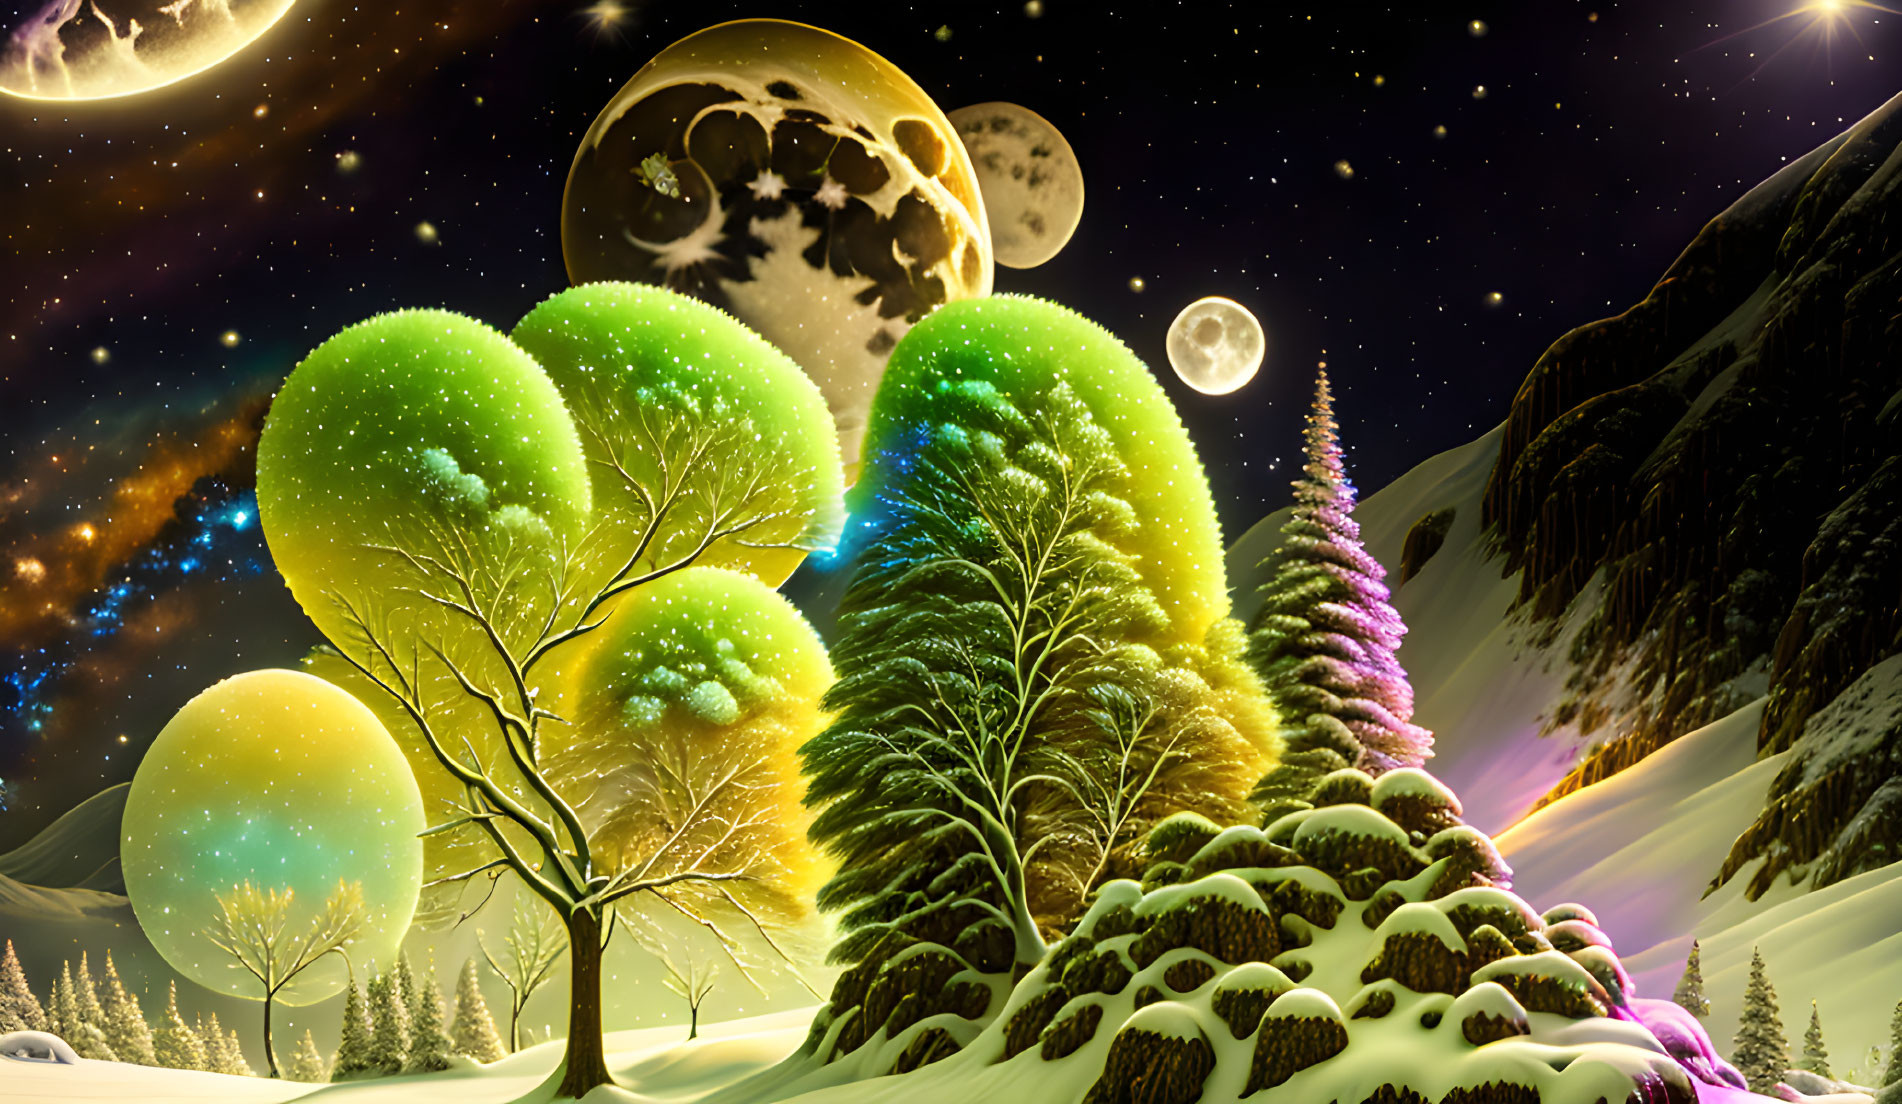 Fantasy Winter Night Scene with Illuminated Trees and Multiple Moons